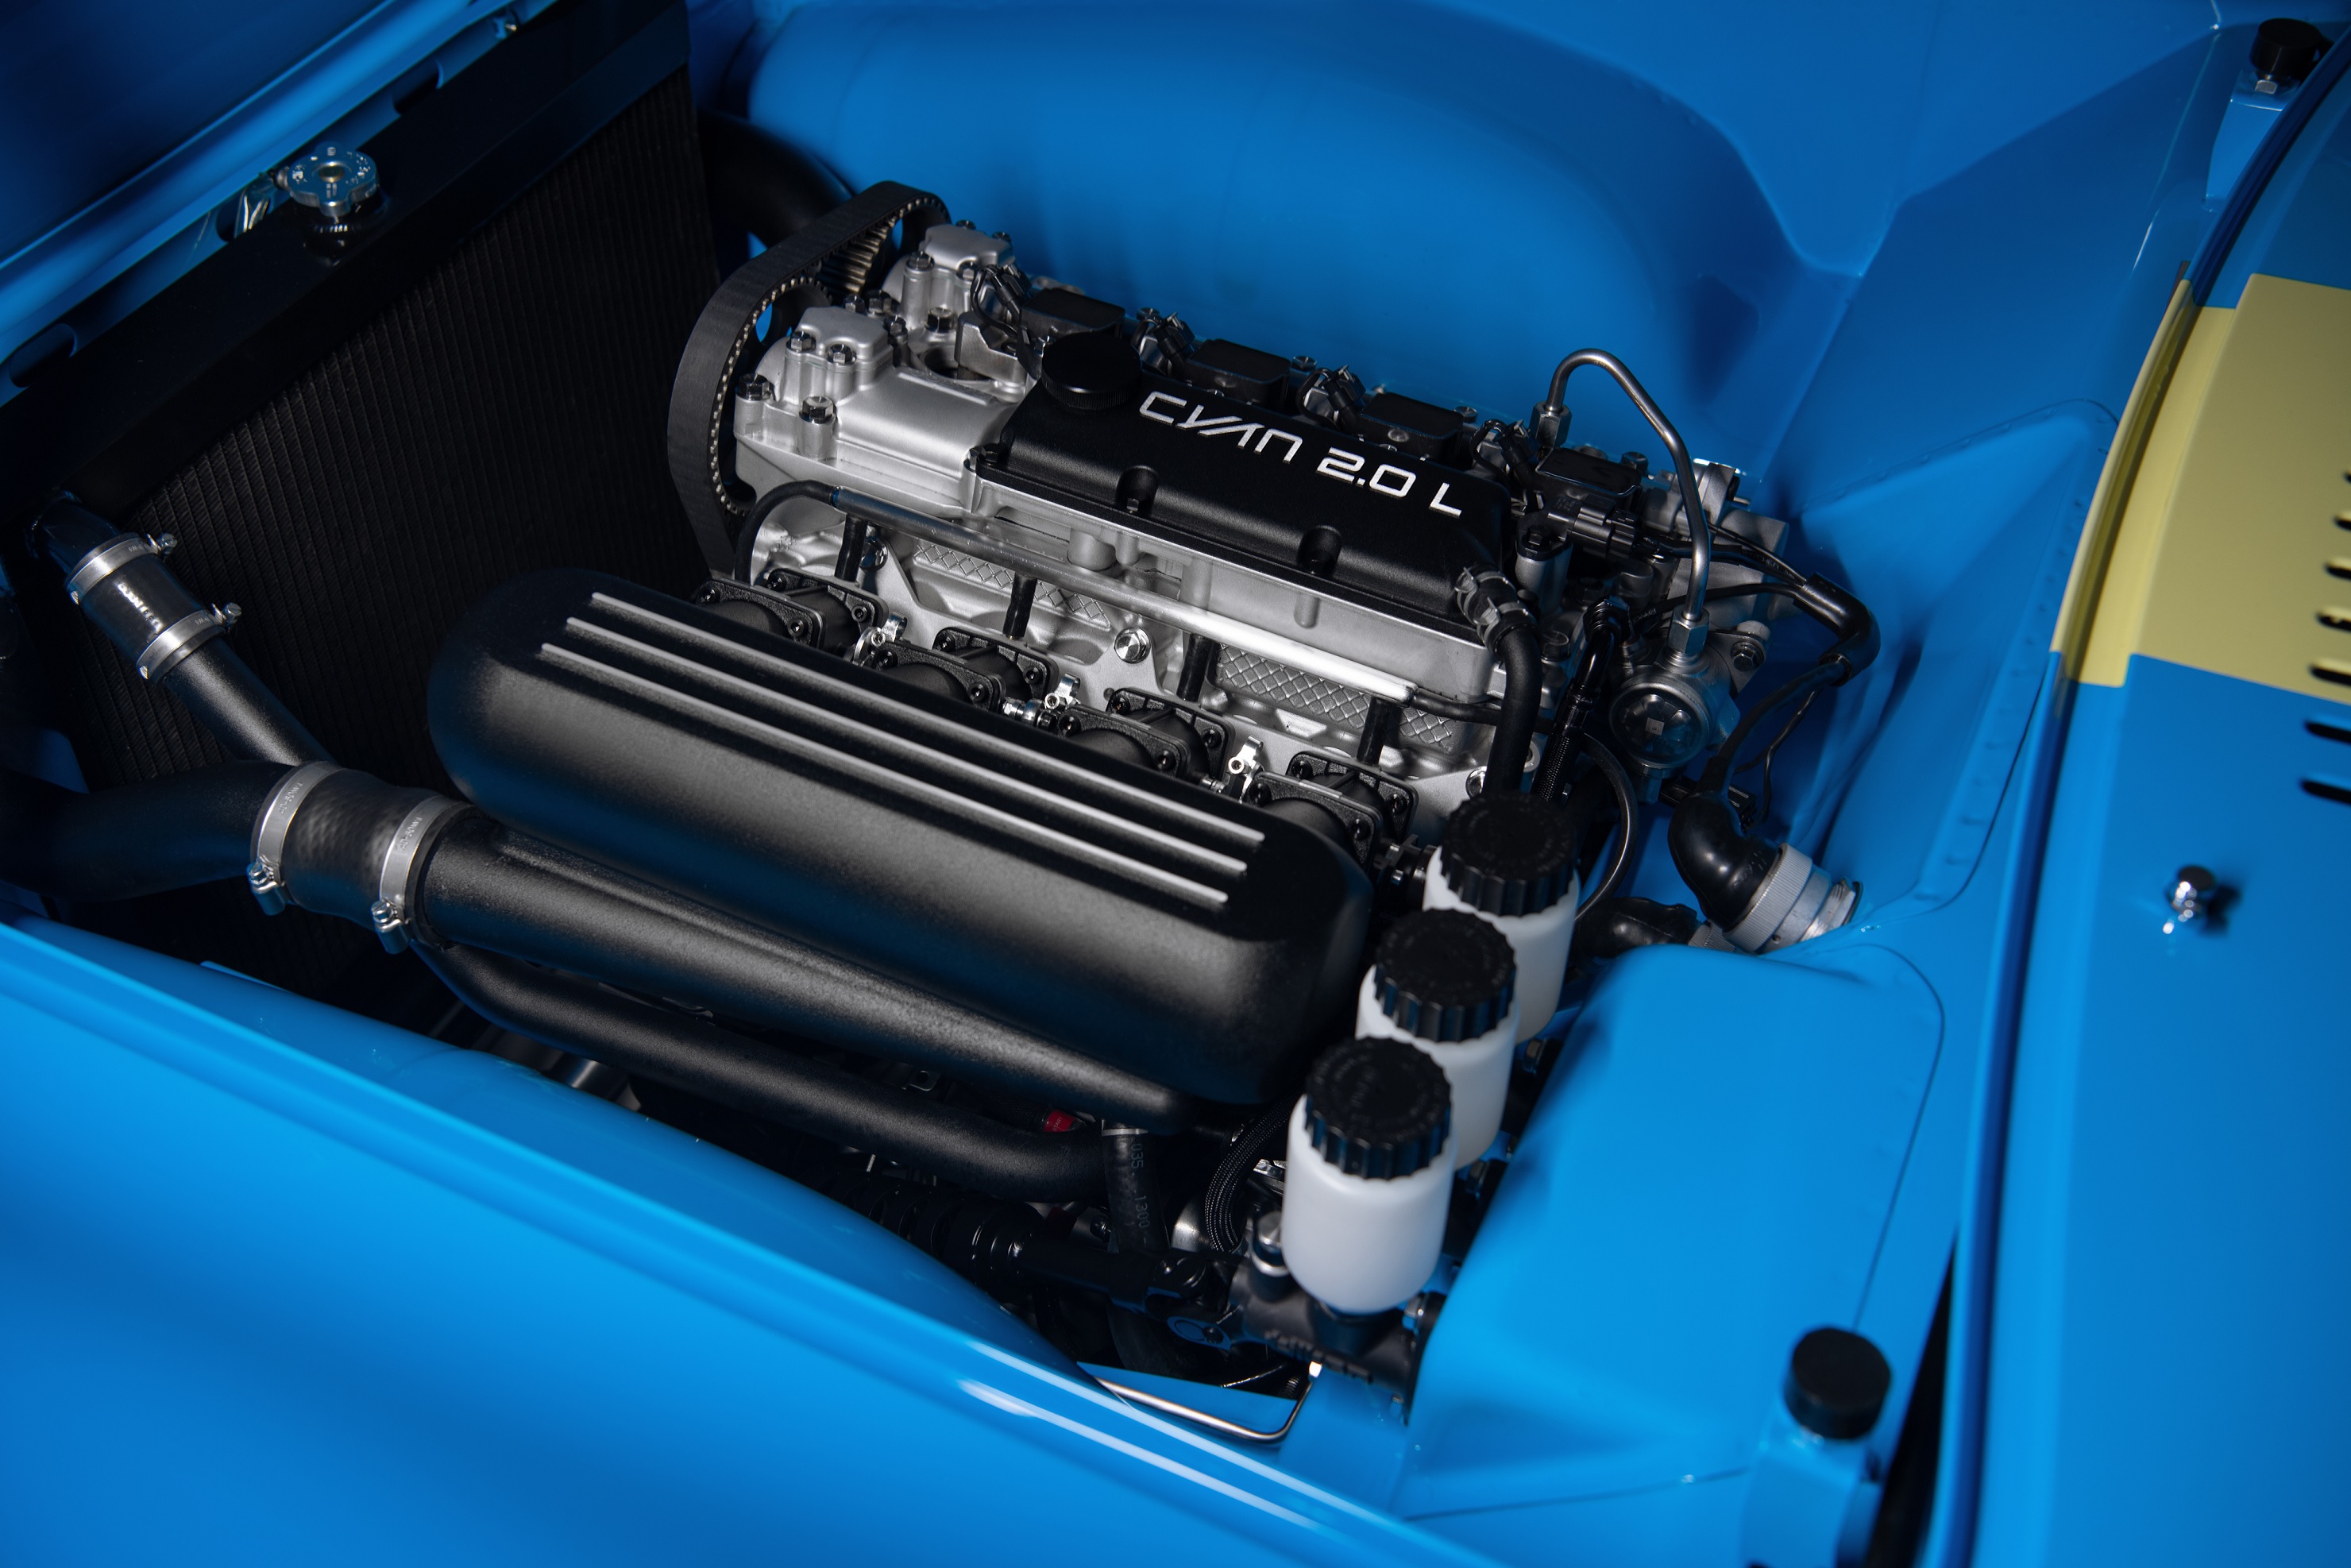 A Volvo P1800 Cyan blue 2.0-liter turbocharged four-cylinder engine